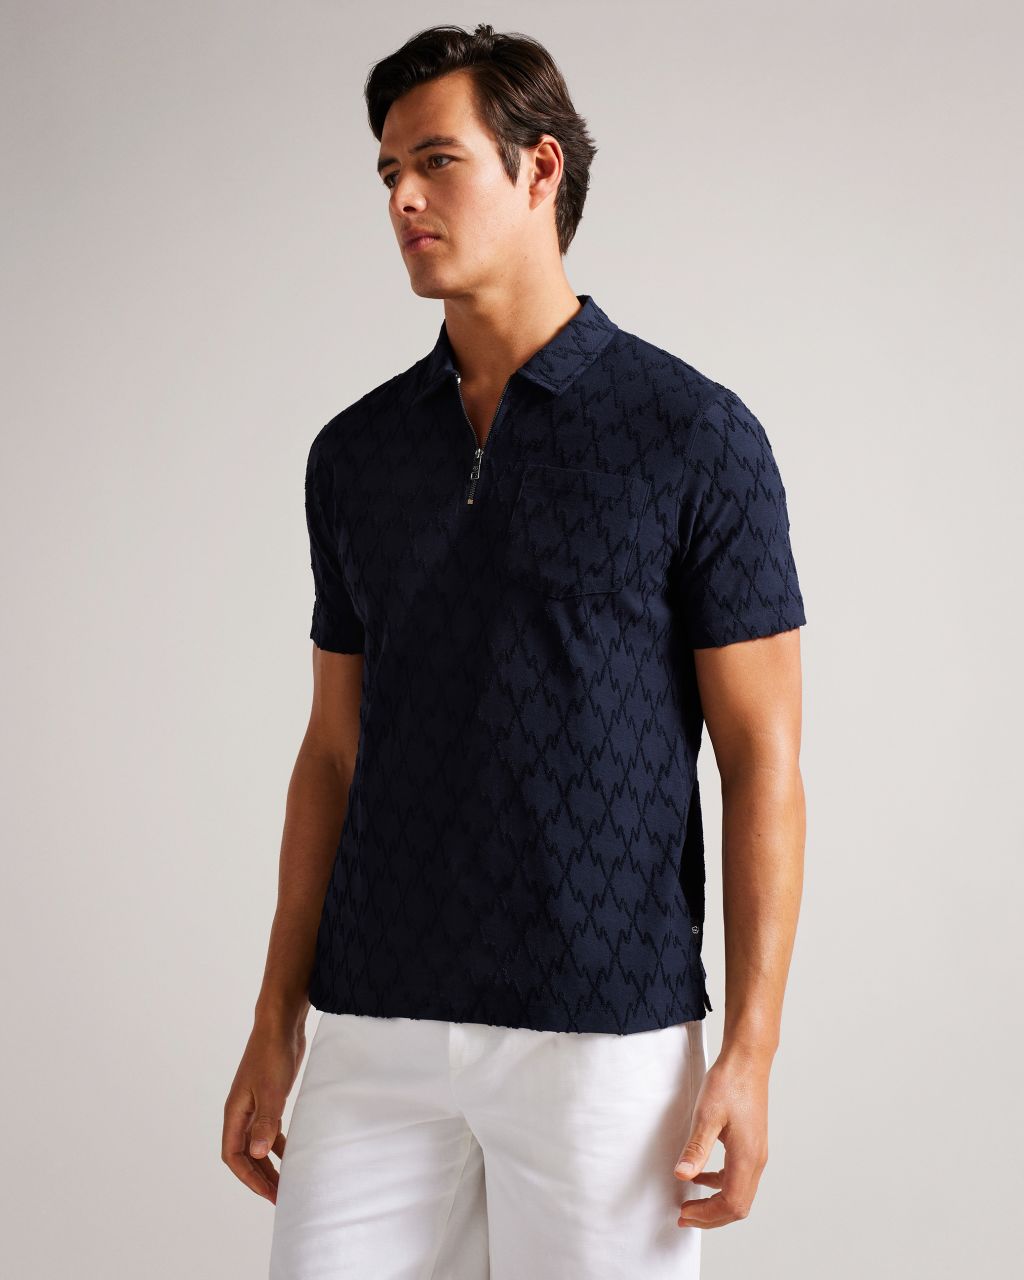 Ted Baker Men's Short Sleeve Zip Jacquard Polo Shirt in Navy, Coram, Cotton